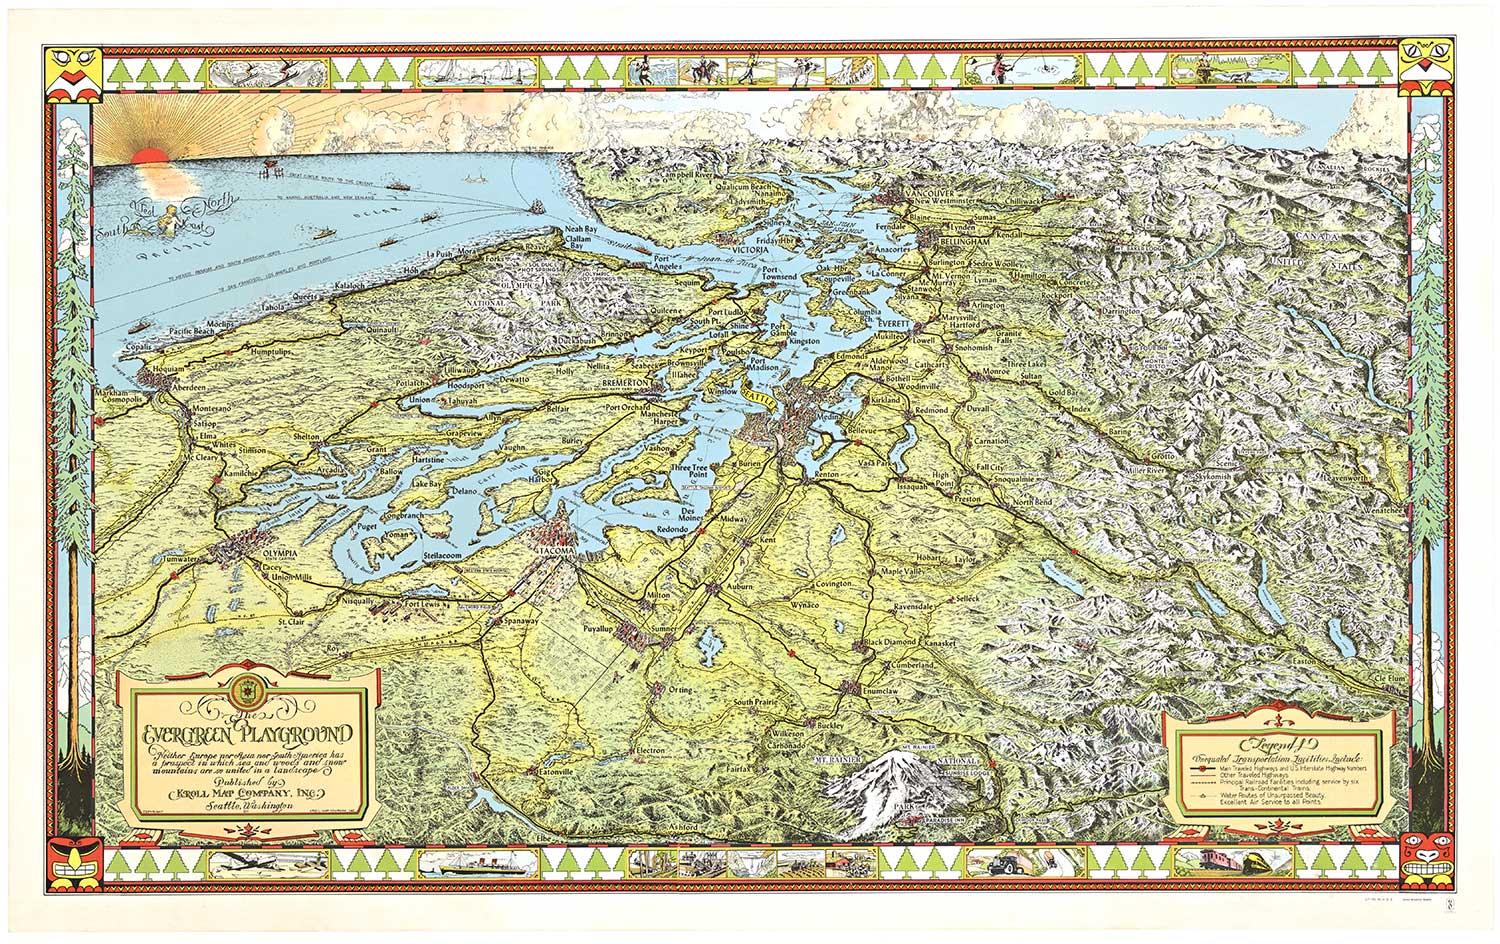 Ed Poland Landscape Print - Original 'The Evergreen Playground' Easter Washington State map 